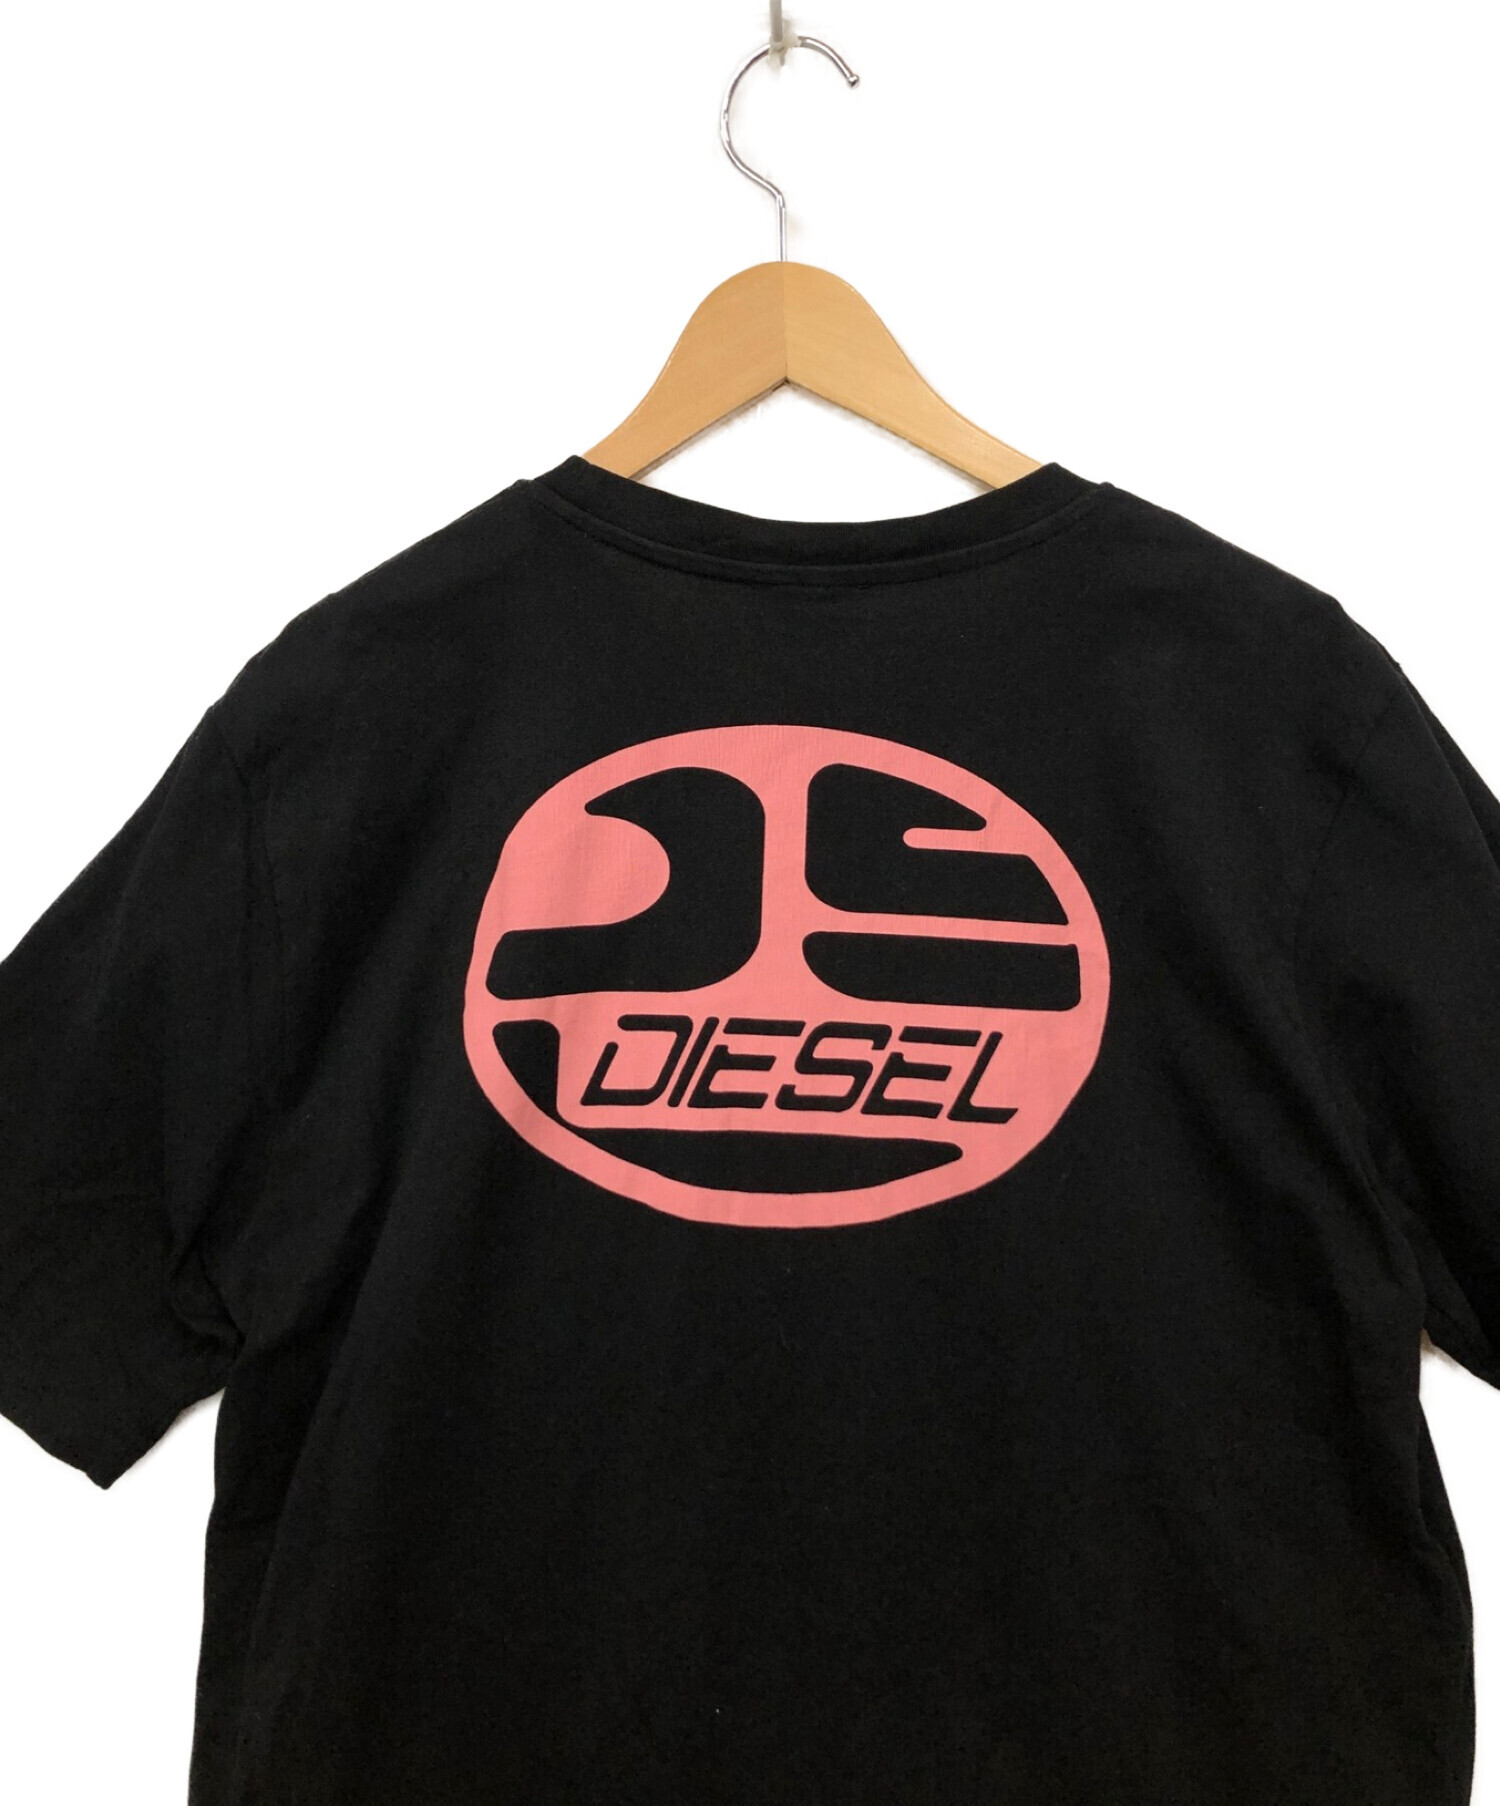 DIESEL (ディーゼル) Tシャツ ブラック サイズ:L